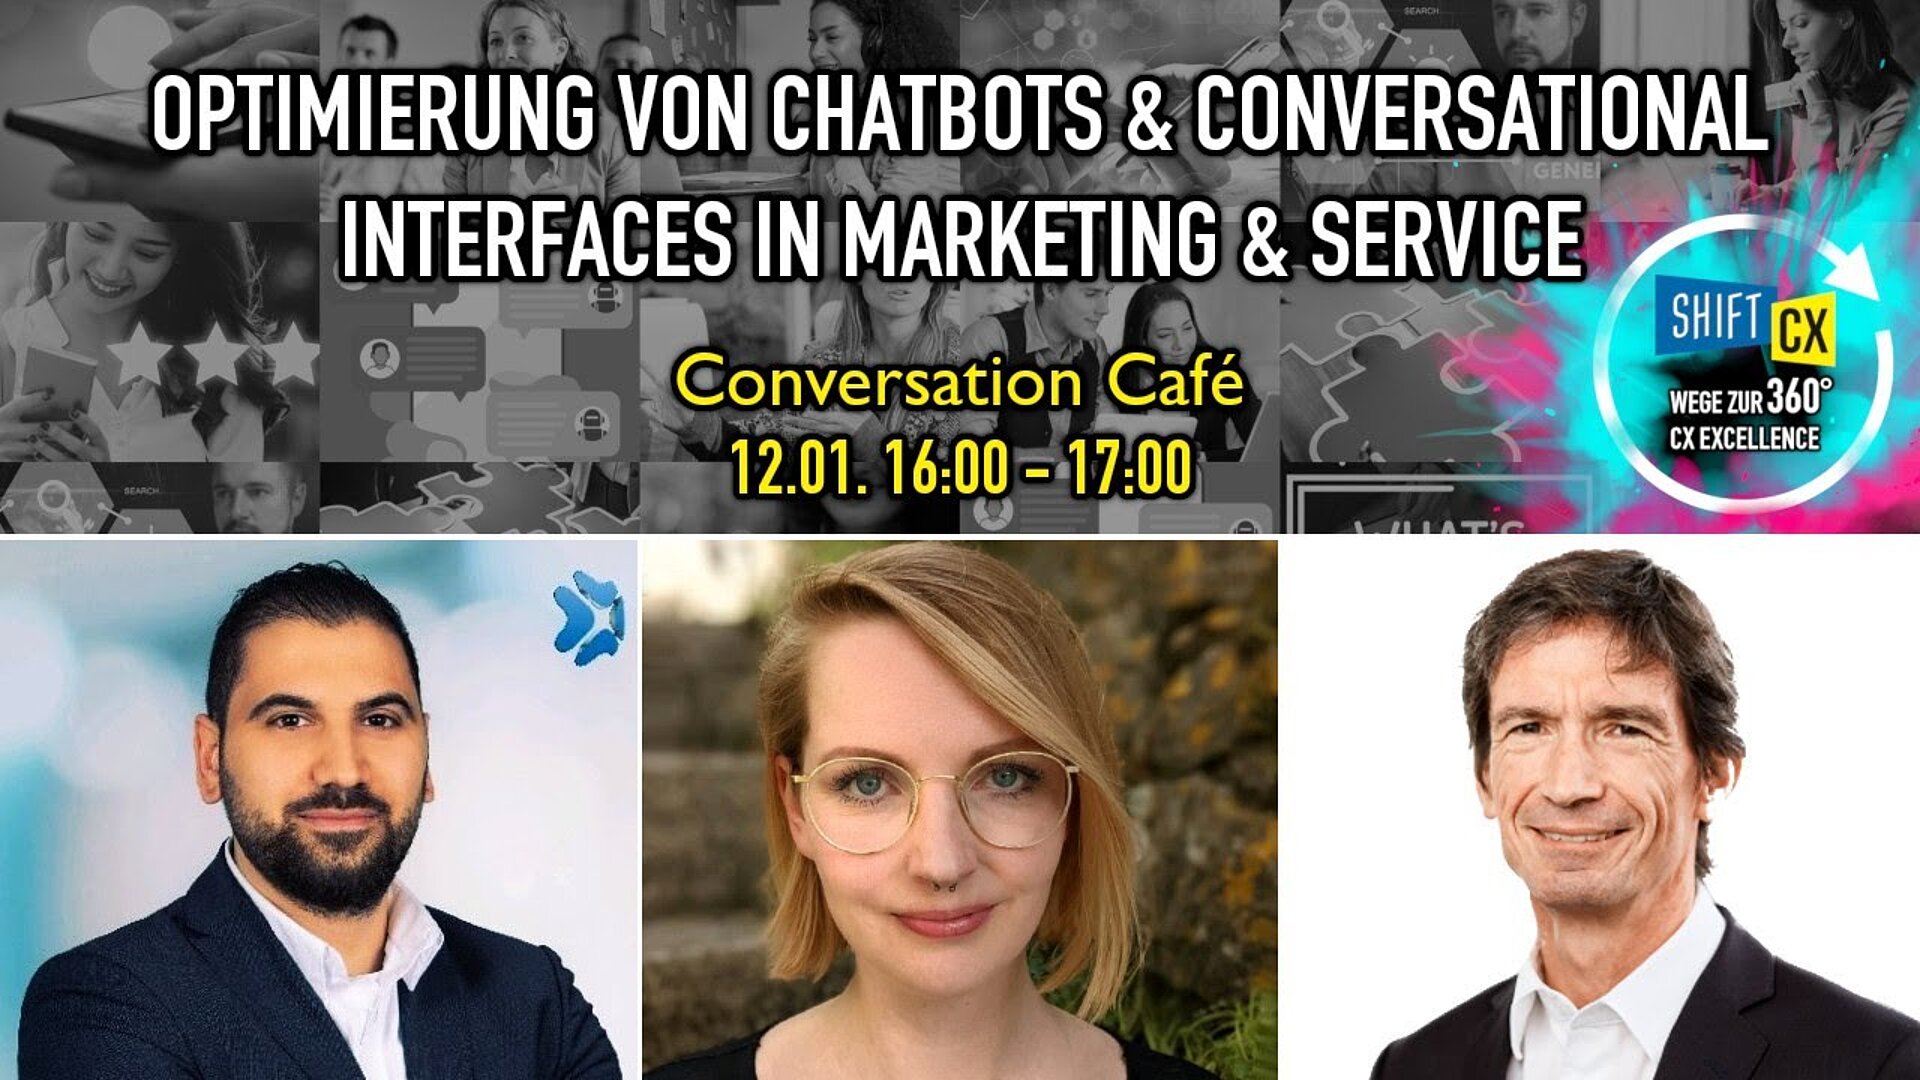 Conversation Café - Optimierung von Chatbots & Conversational Interfaces in Marketing & Service